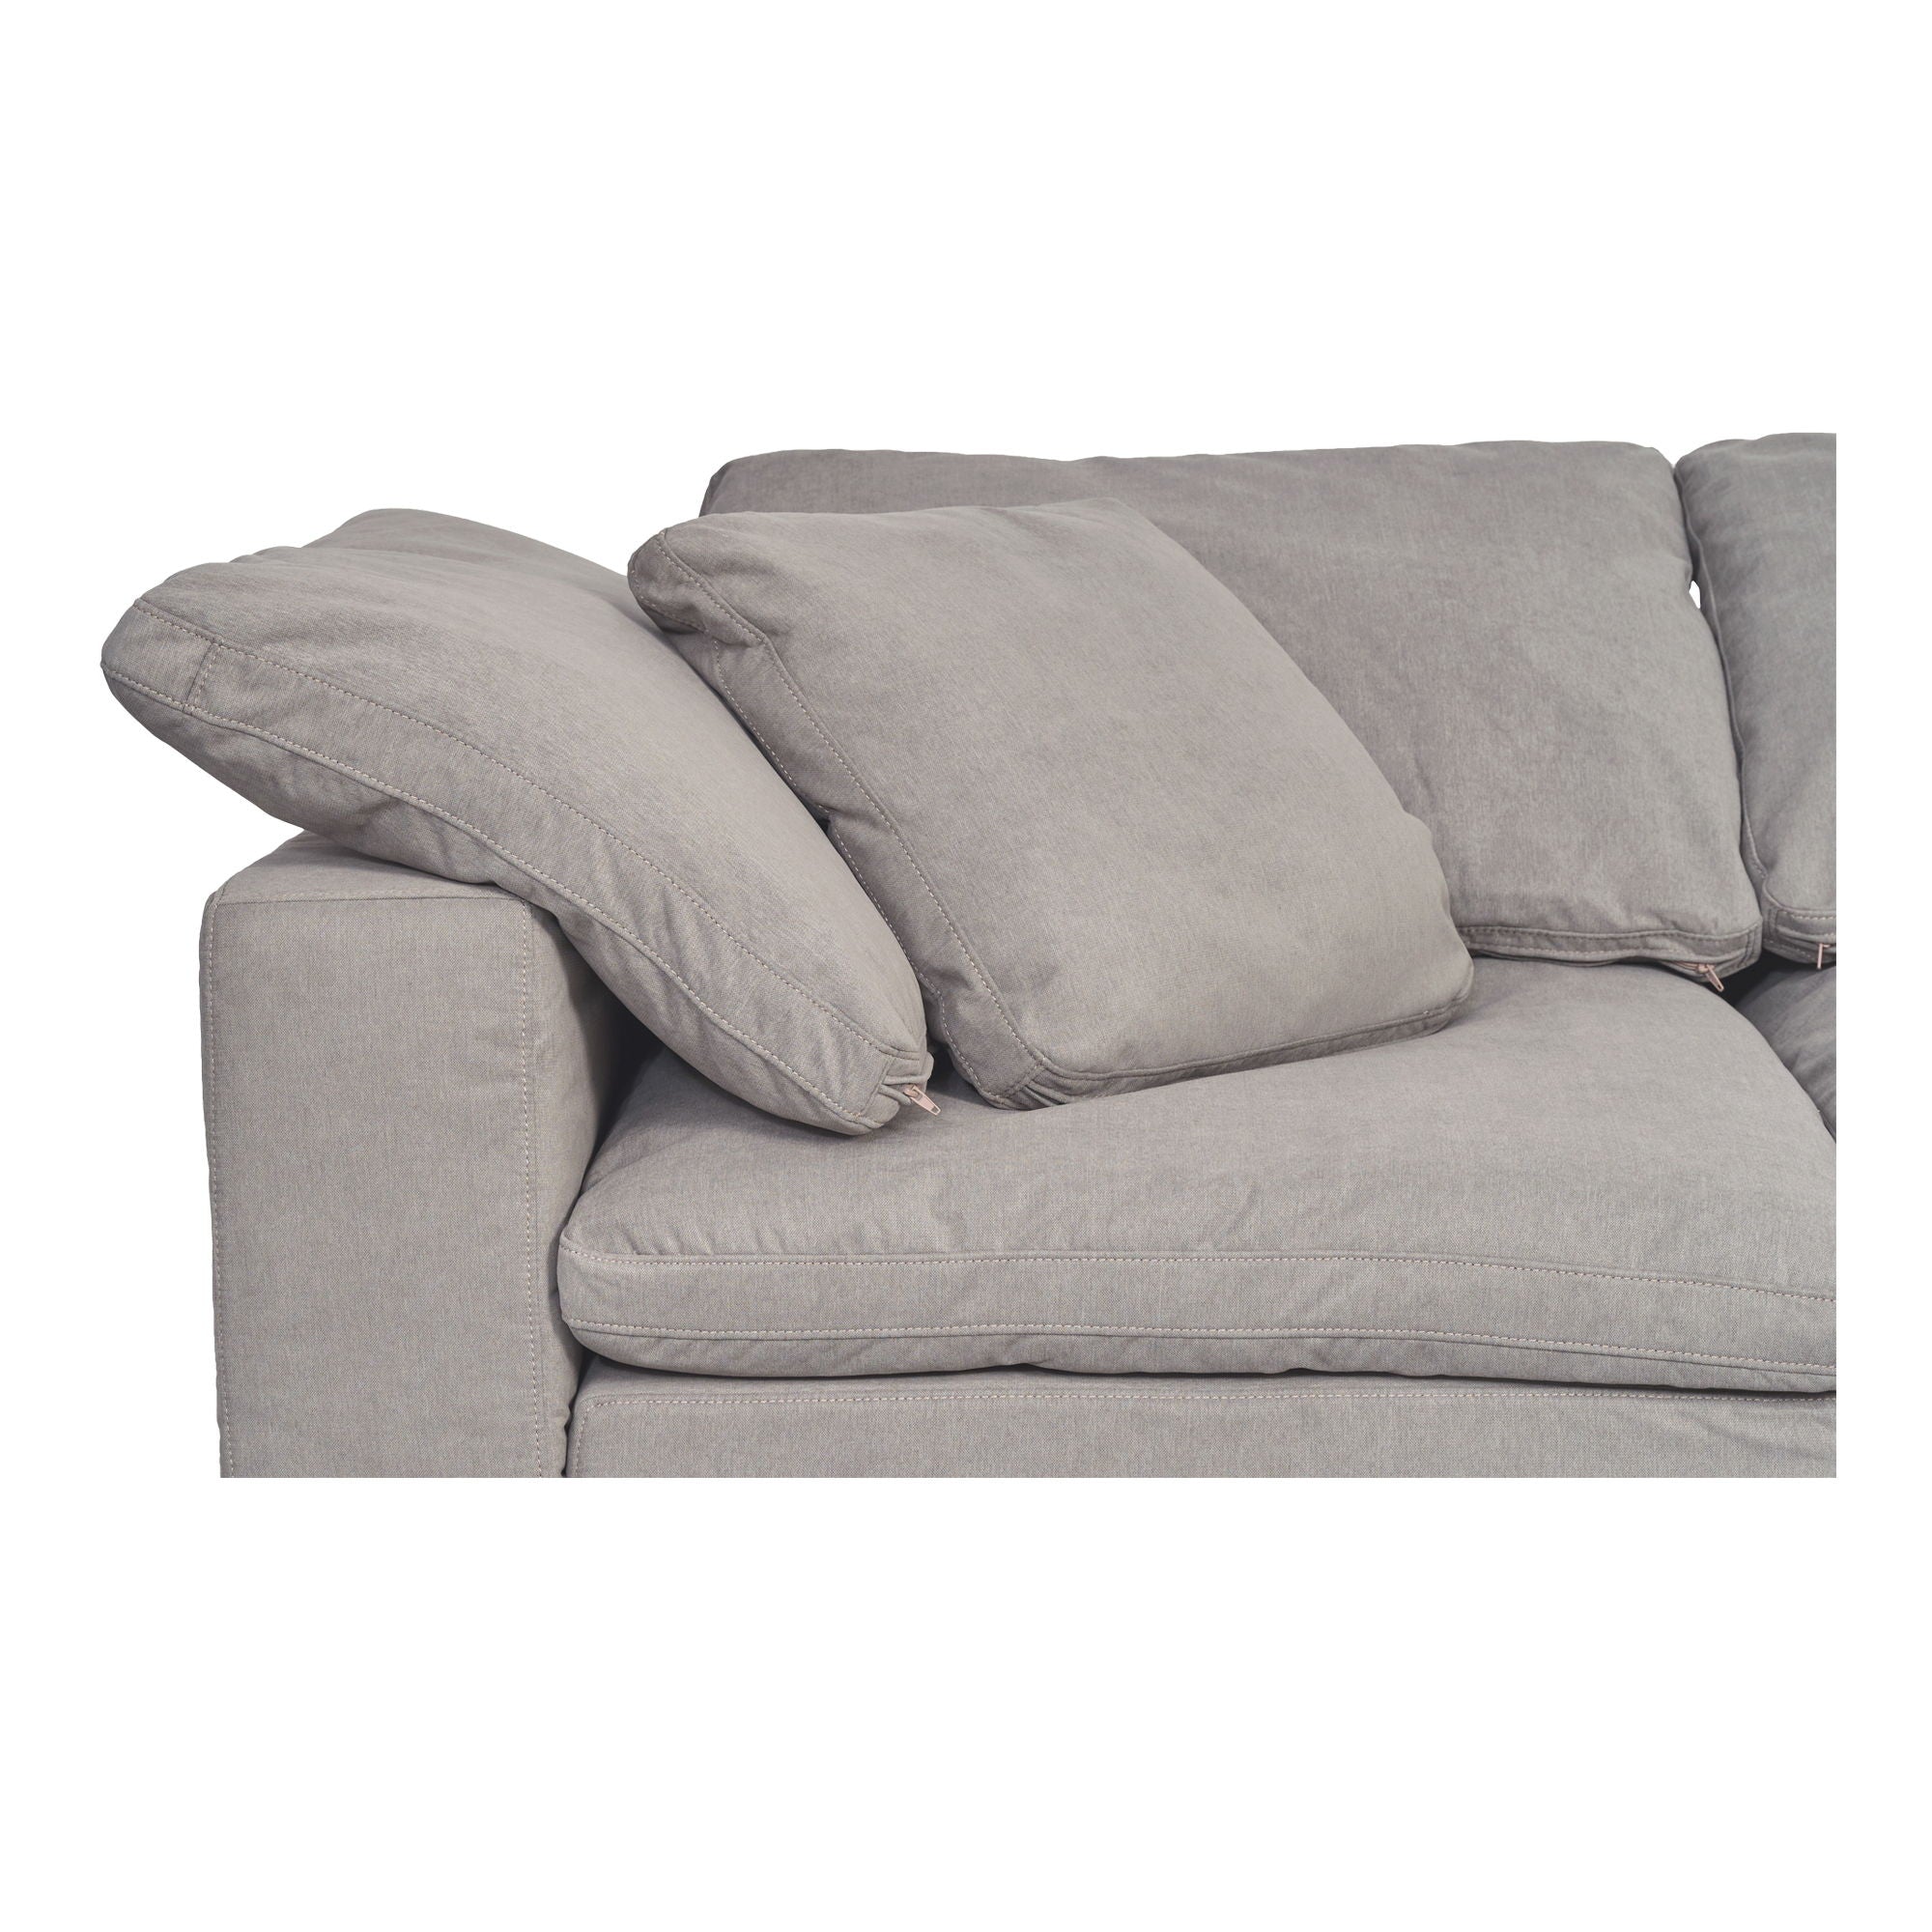 Terra - Modular Sofa Performance Fabric - Light Grey